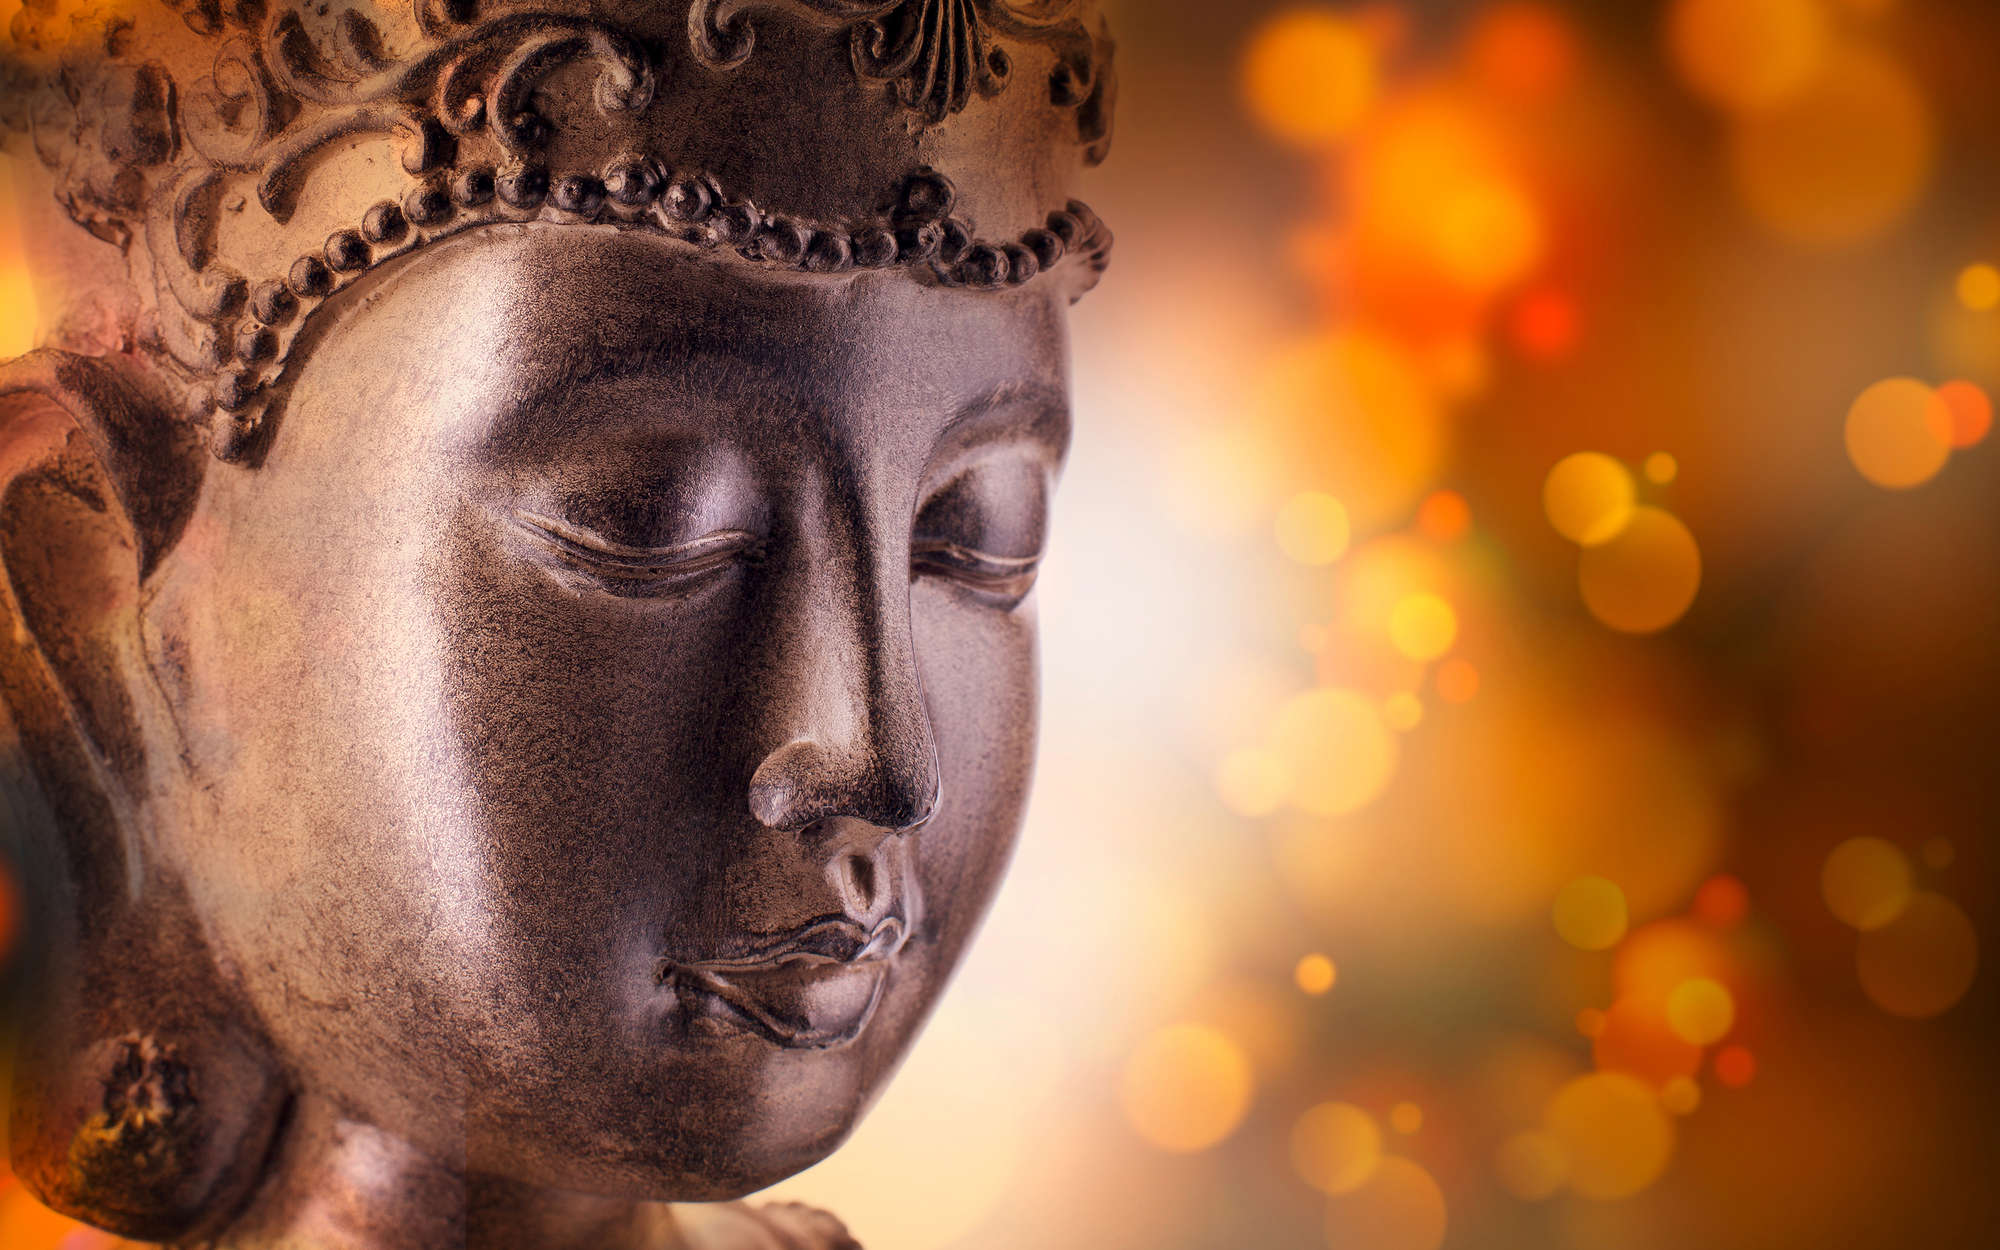             Fototapete Detailaufnahme von Buddha-Statue – Perlmutt Glattvlies
        